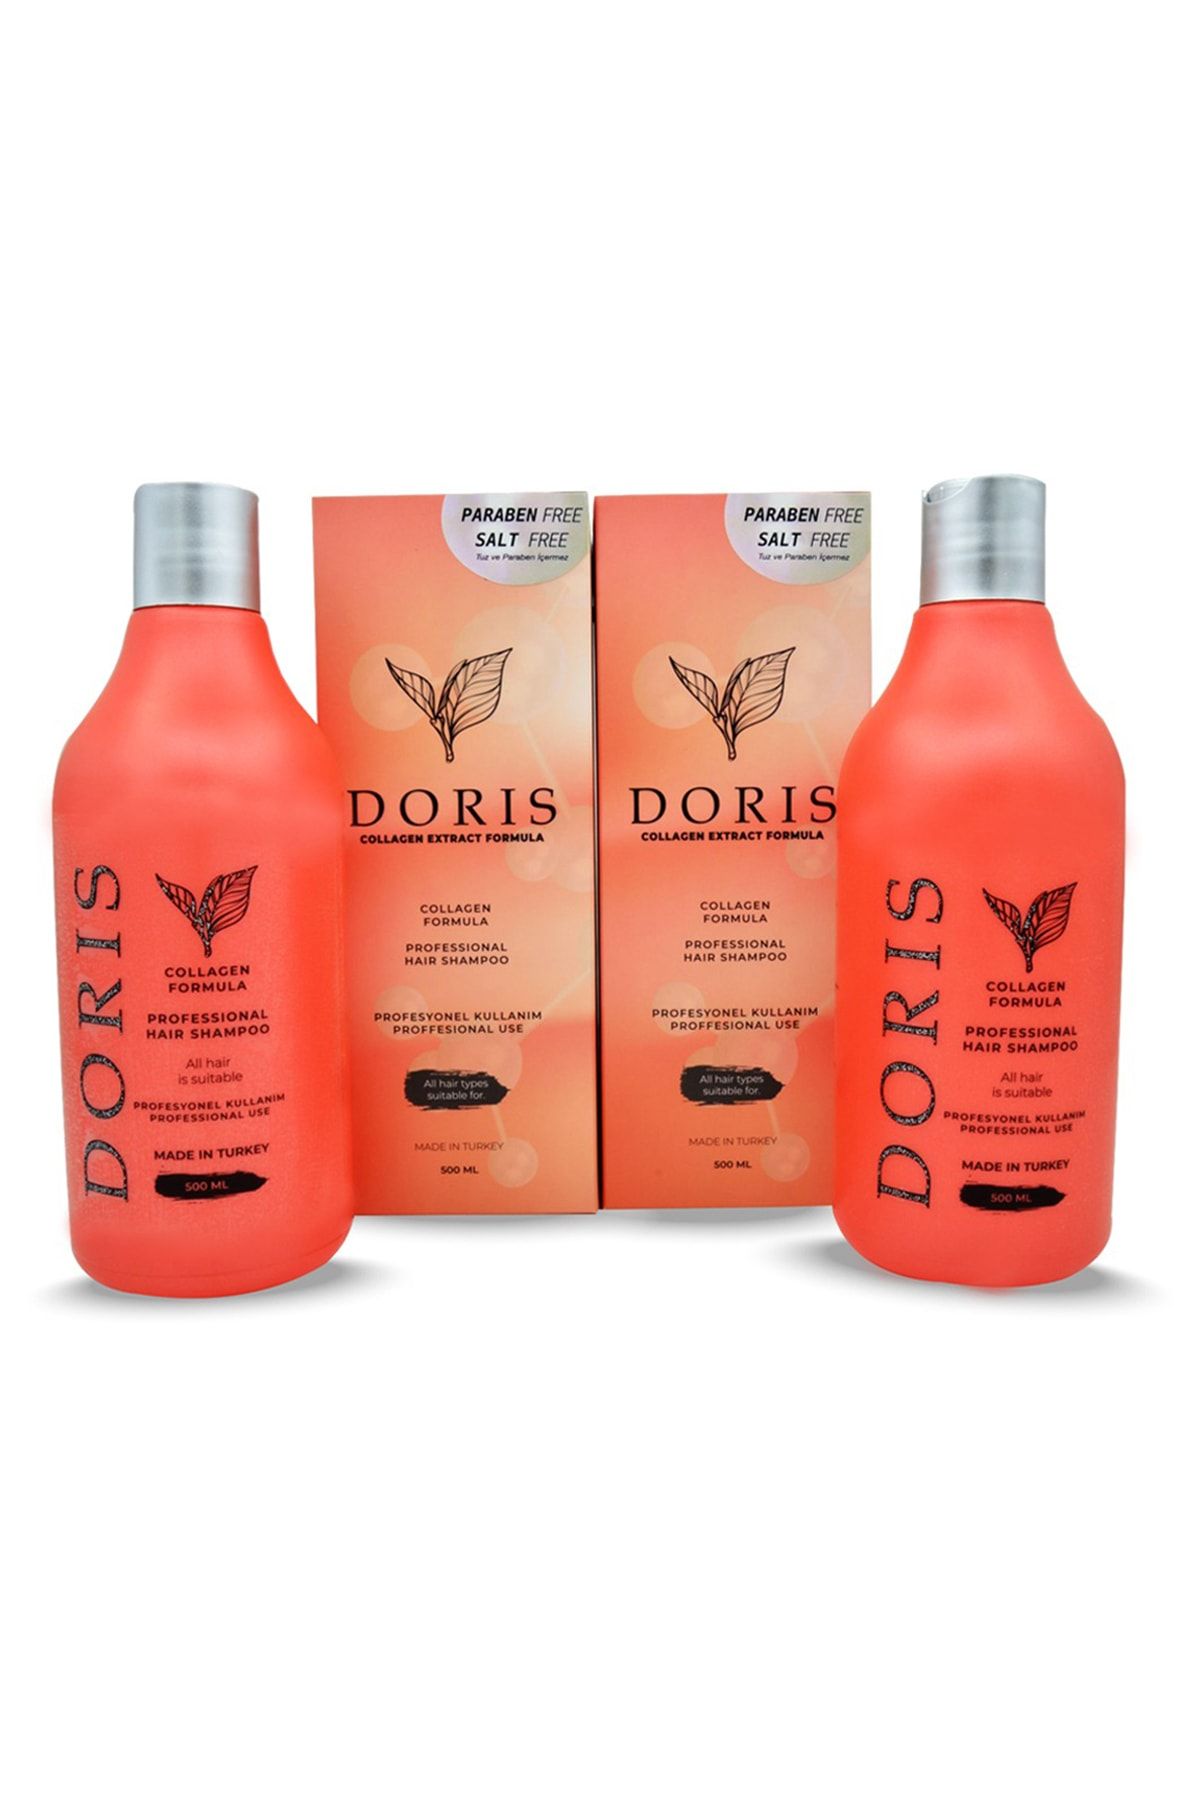 Doris Collegene&keratin Formüllü Şampuan 2 Li Paket